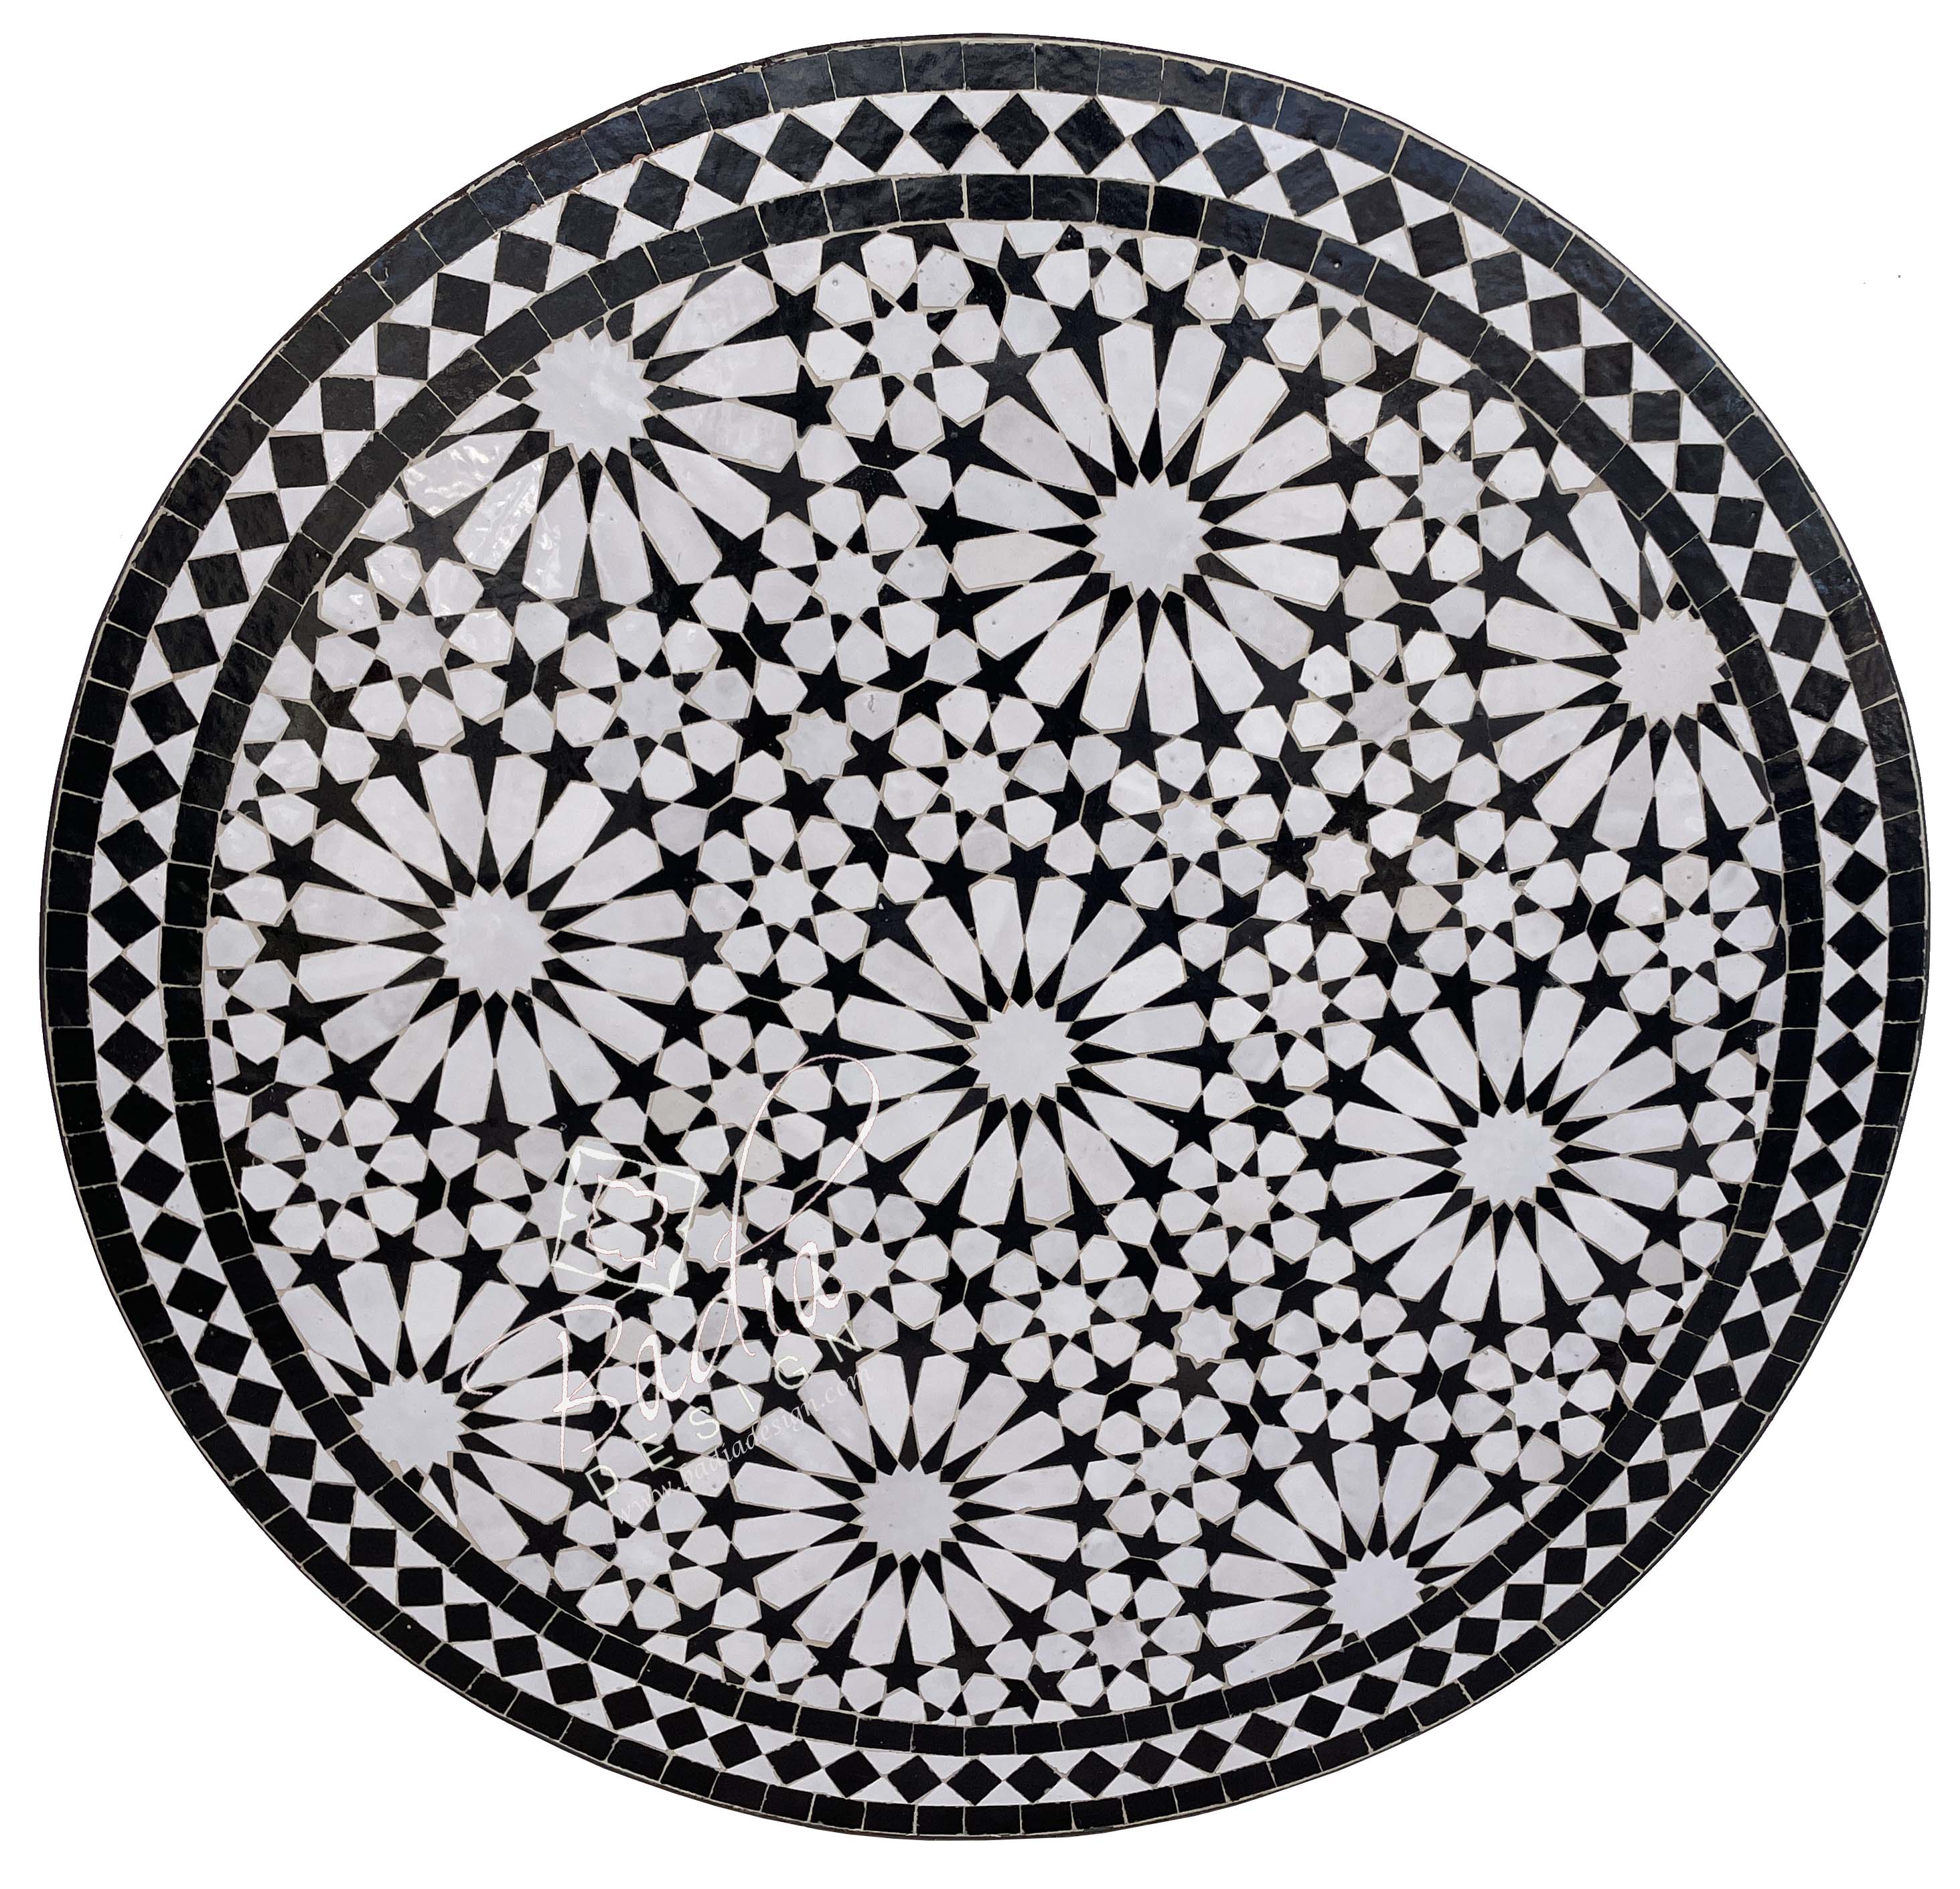 moroccan-tile-table-for-my-backyard-ideas-mtr369.jpg